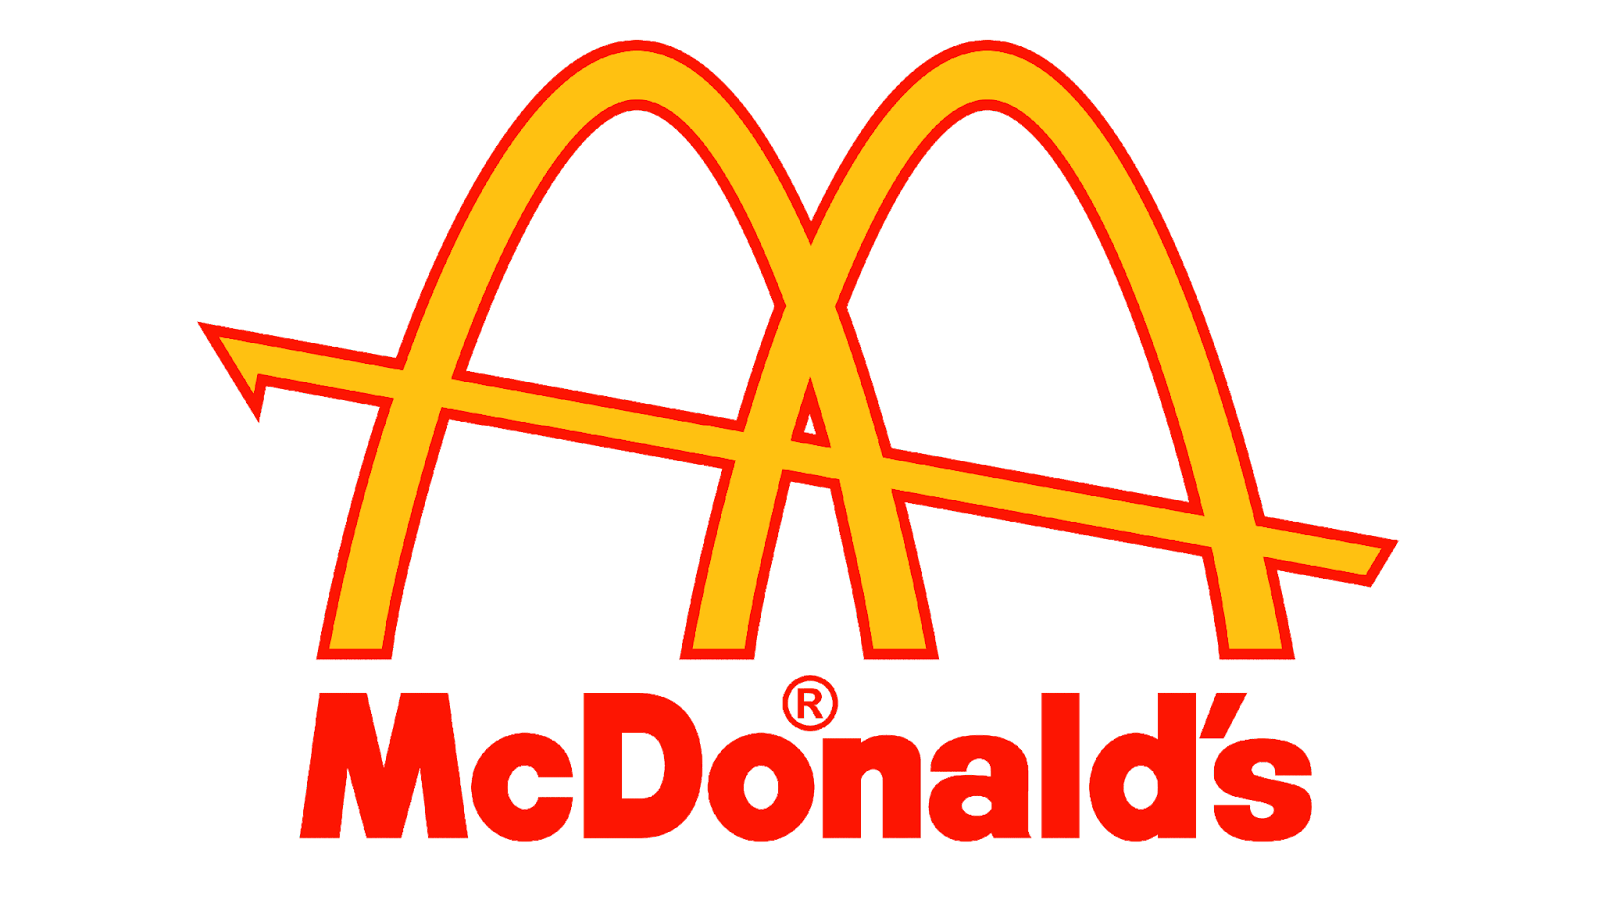 McDonald's first M logo